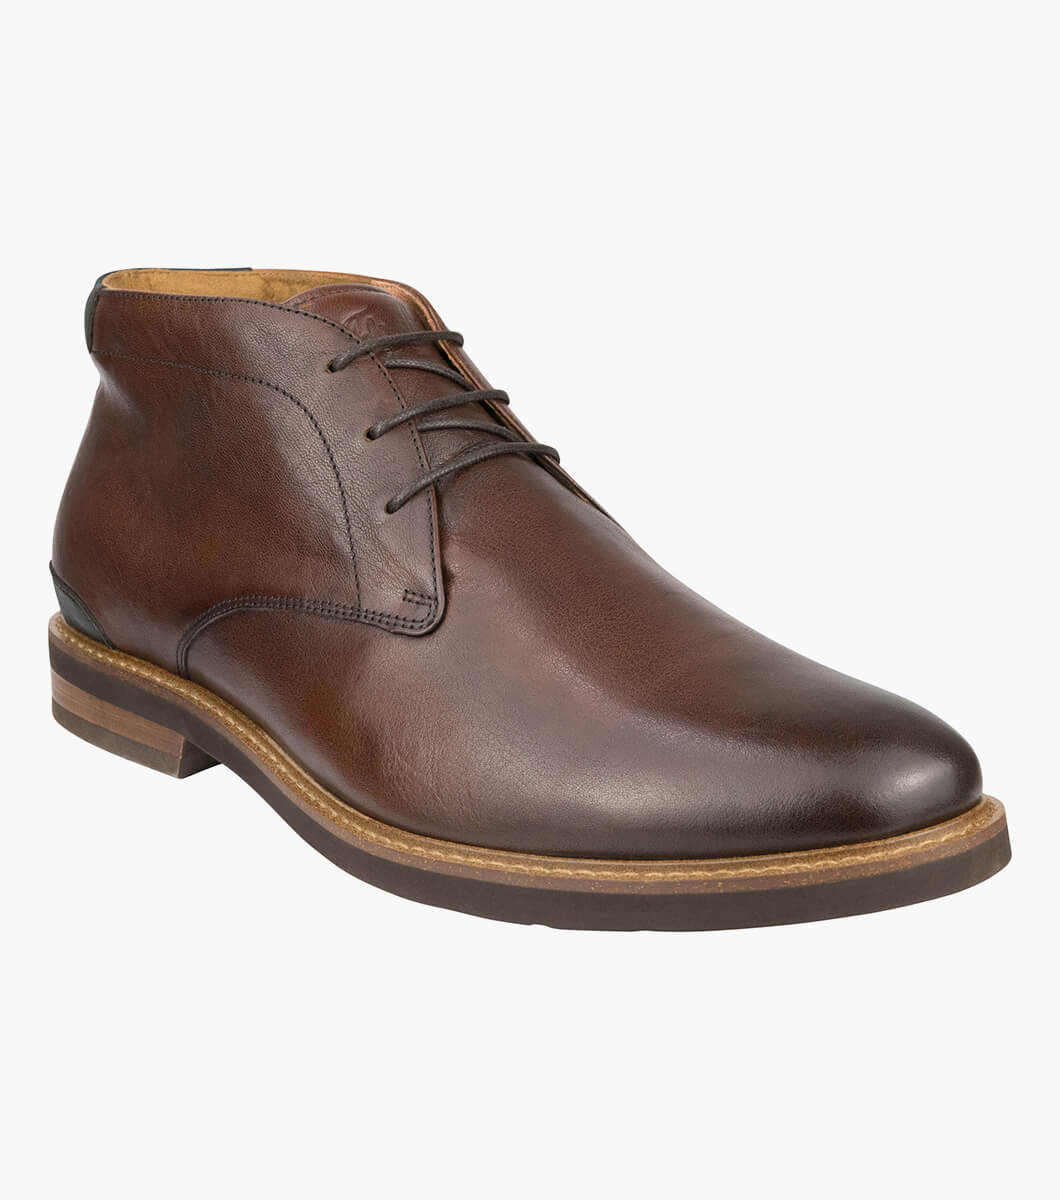 Highland Chukka Plain Toe Chukka Boot Men’s Casual Shoes | Florsheim.com